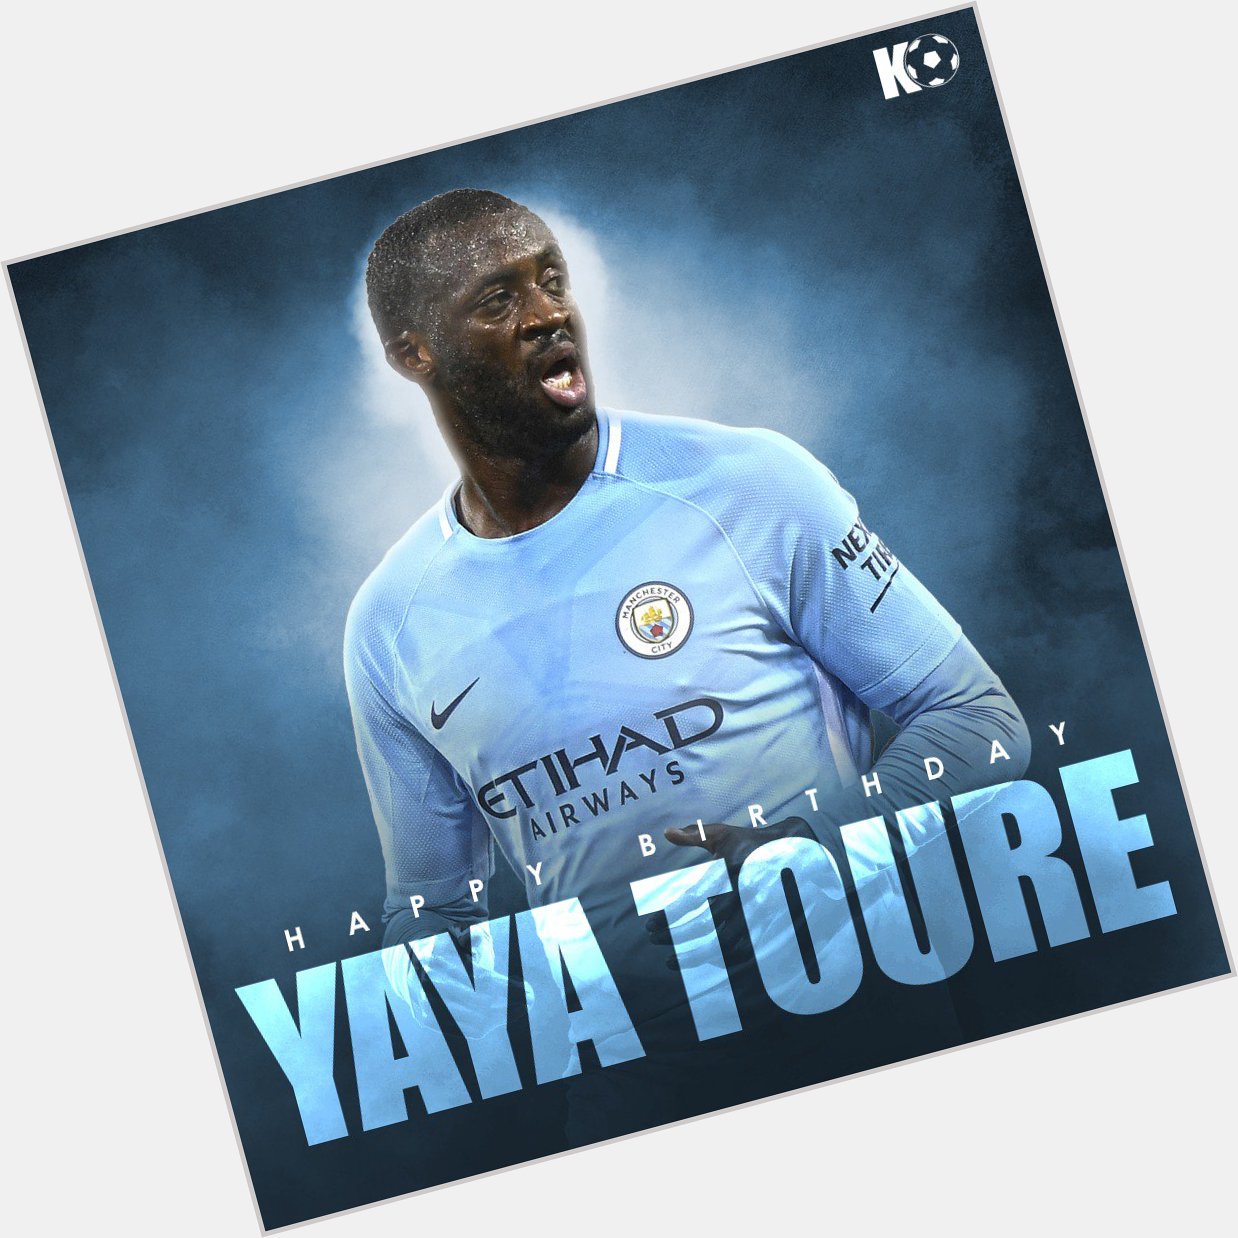 Here s to a Manchester City legend, here s your birthday cake Yaya... Happy Birthday, Yaya Toure! 